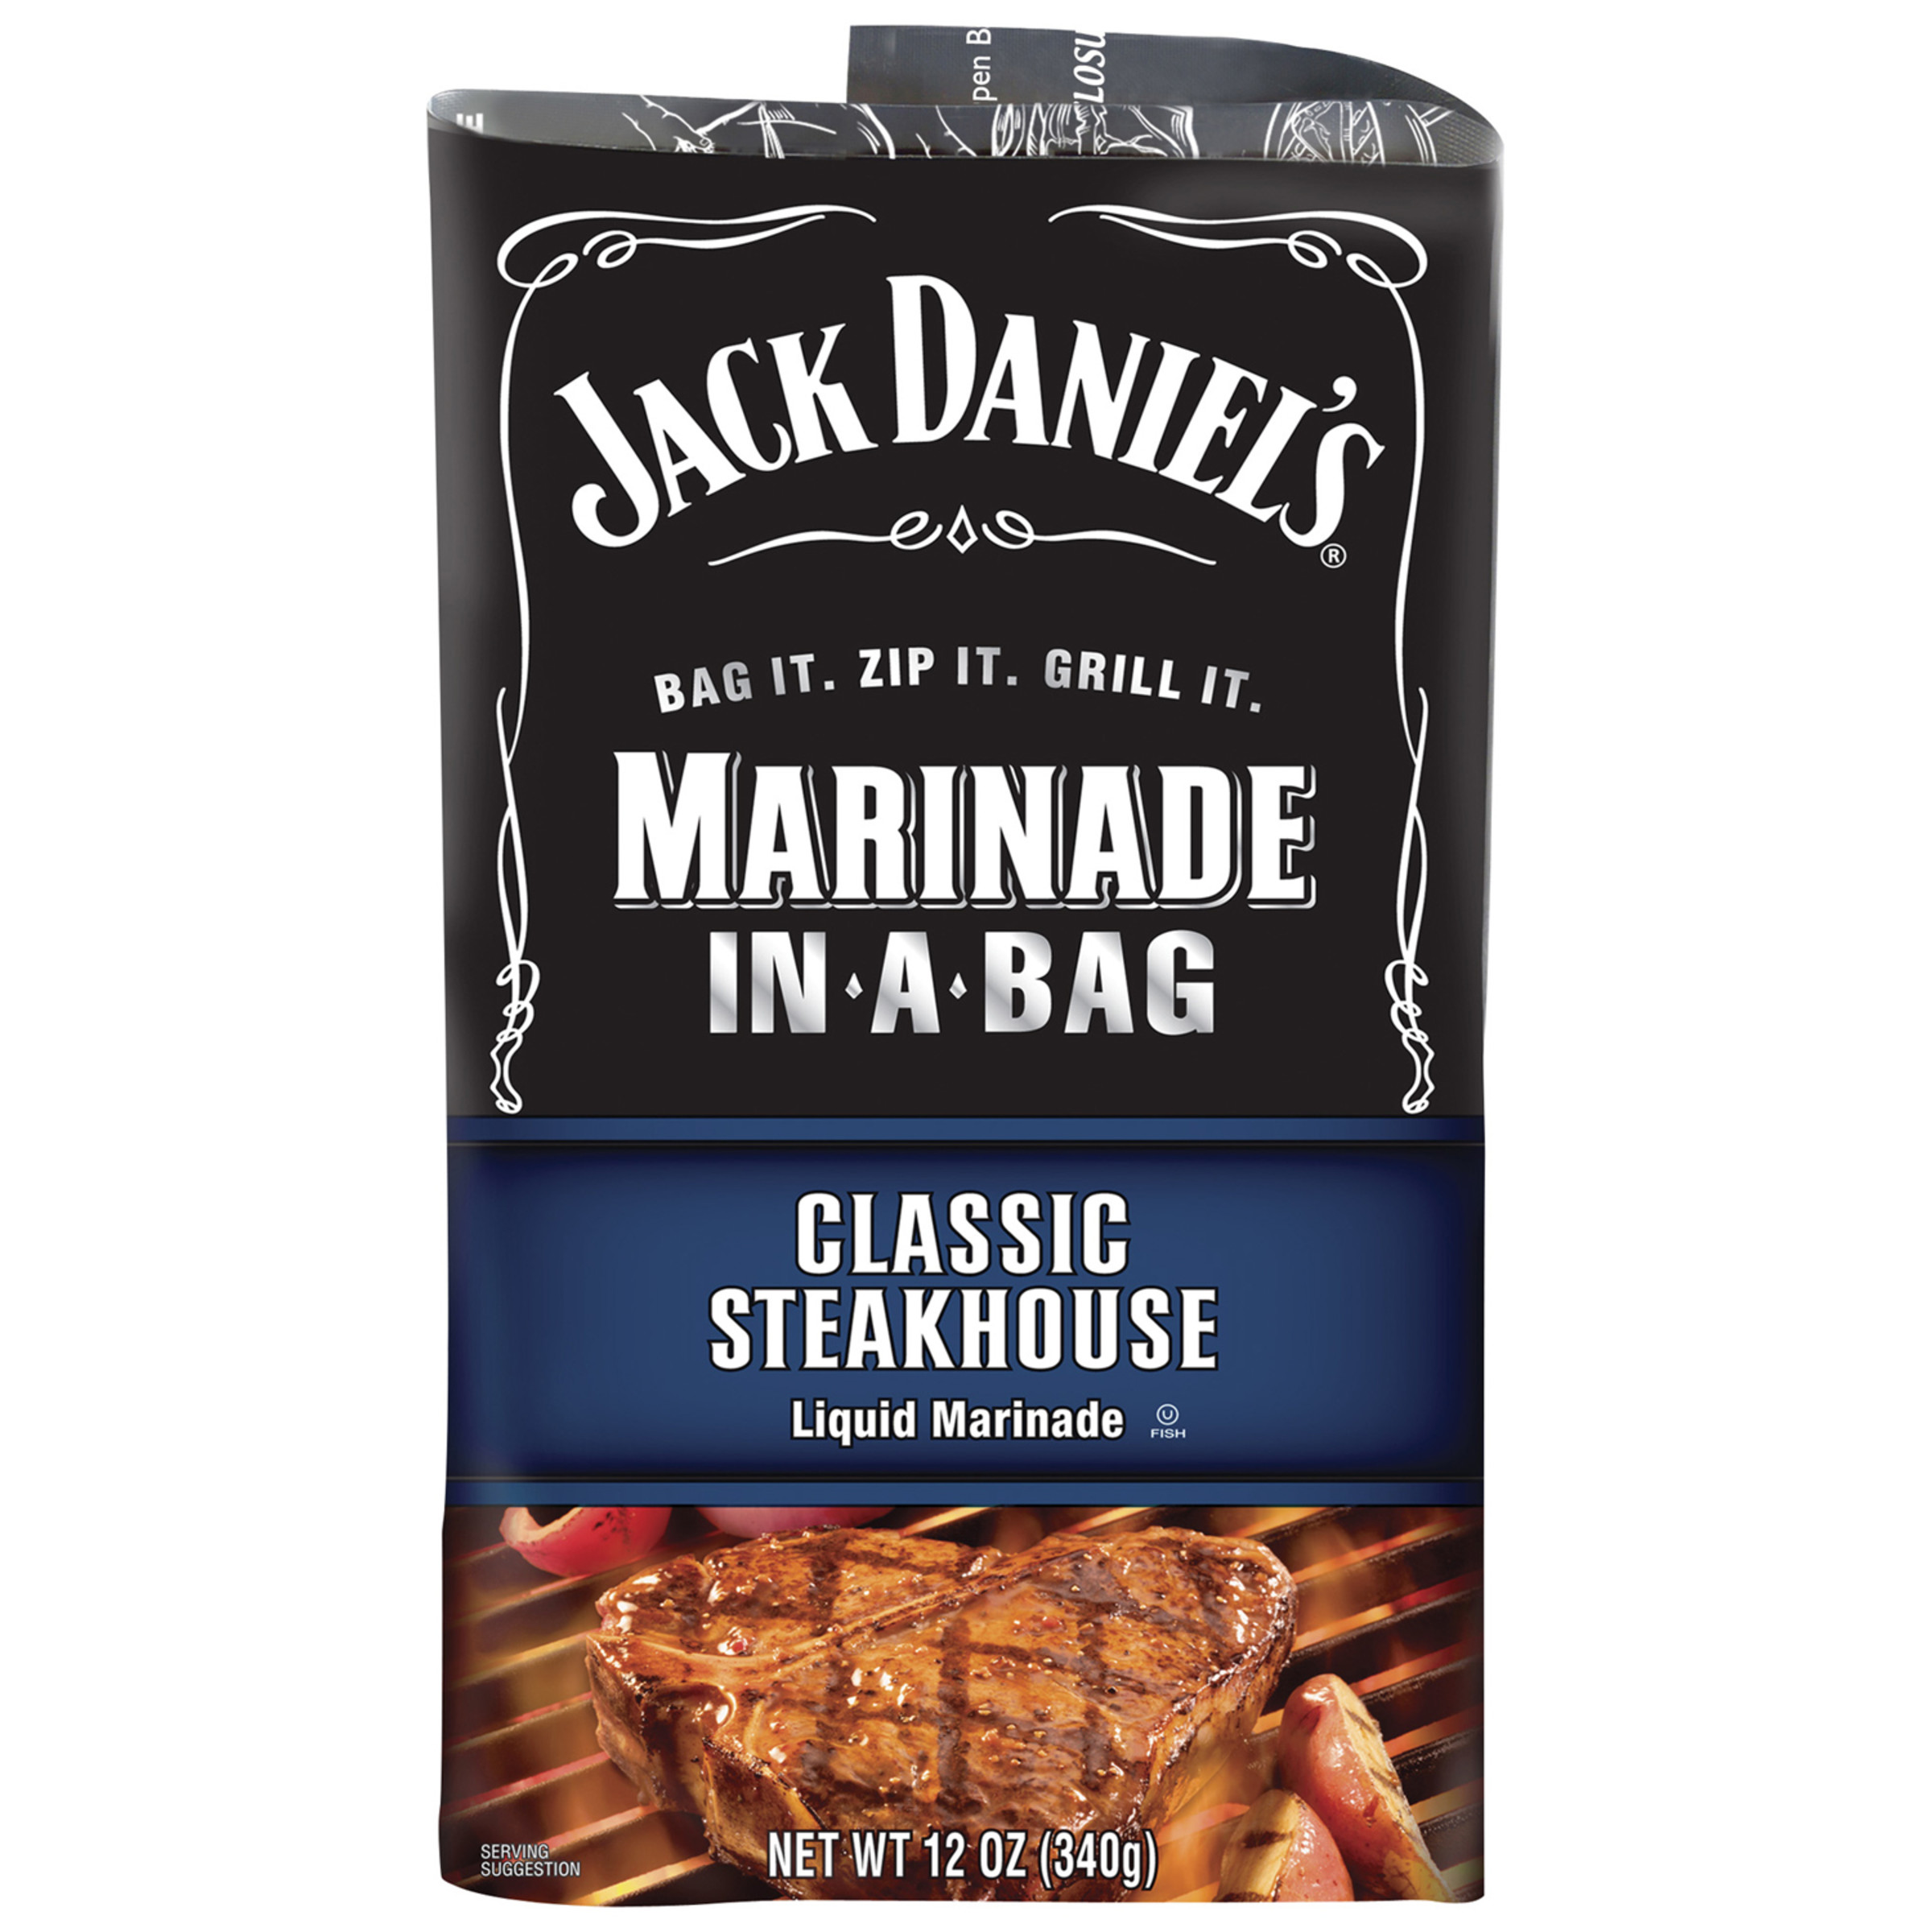 Jack Daniel's Marinade In-A-Bag Classic Steakhouse Liquid Marinade, 12 oz Bag - image 1 of 2